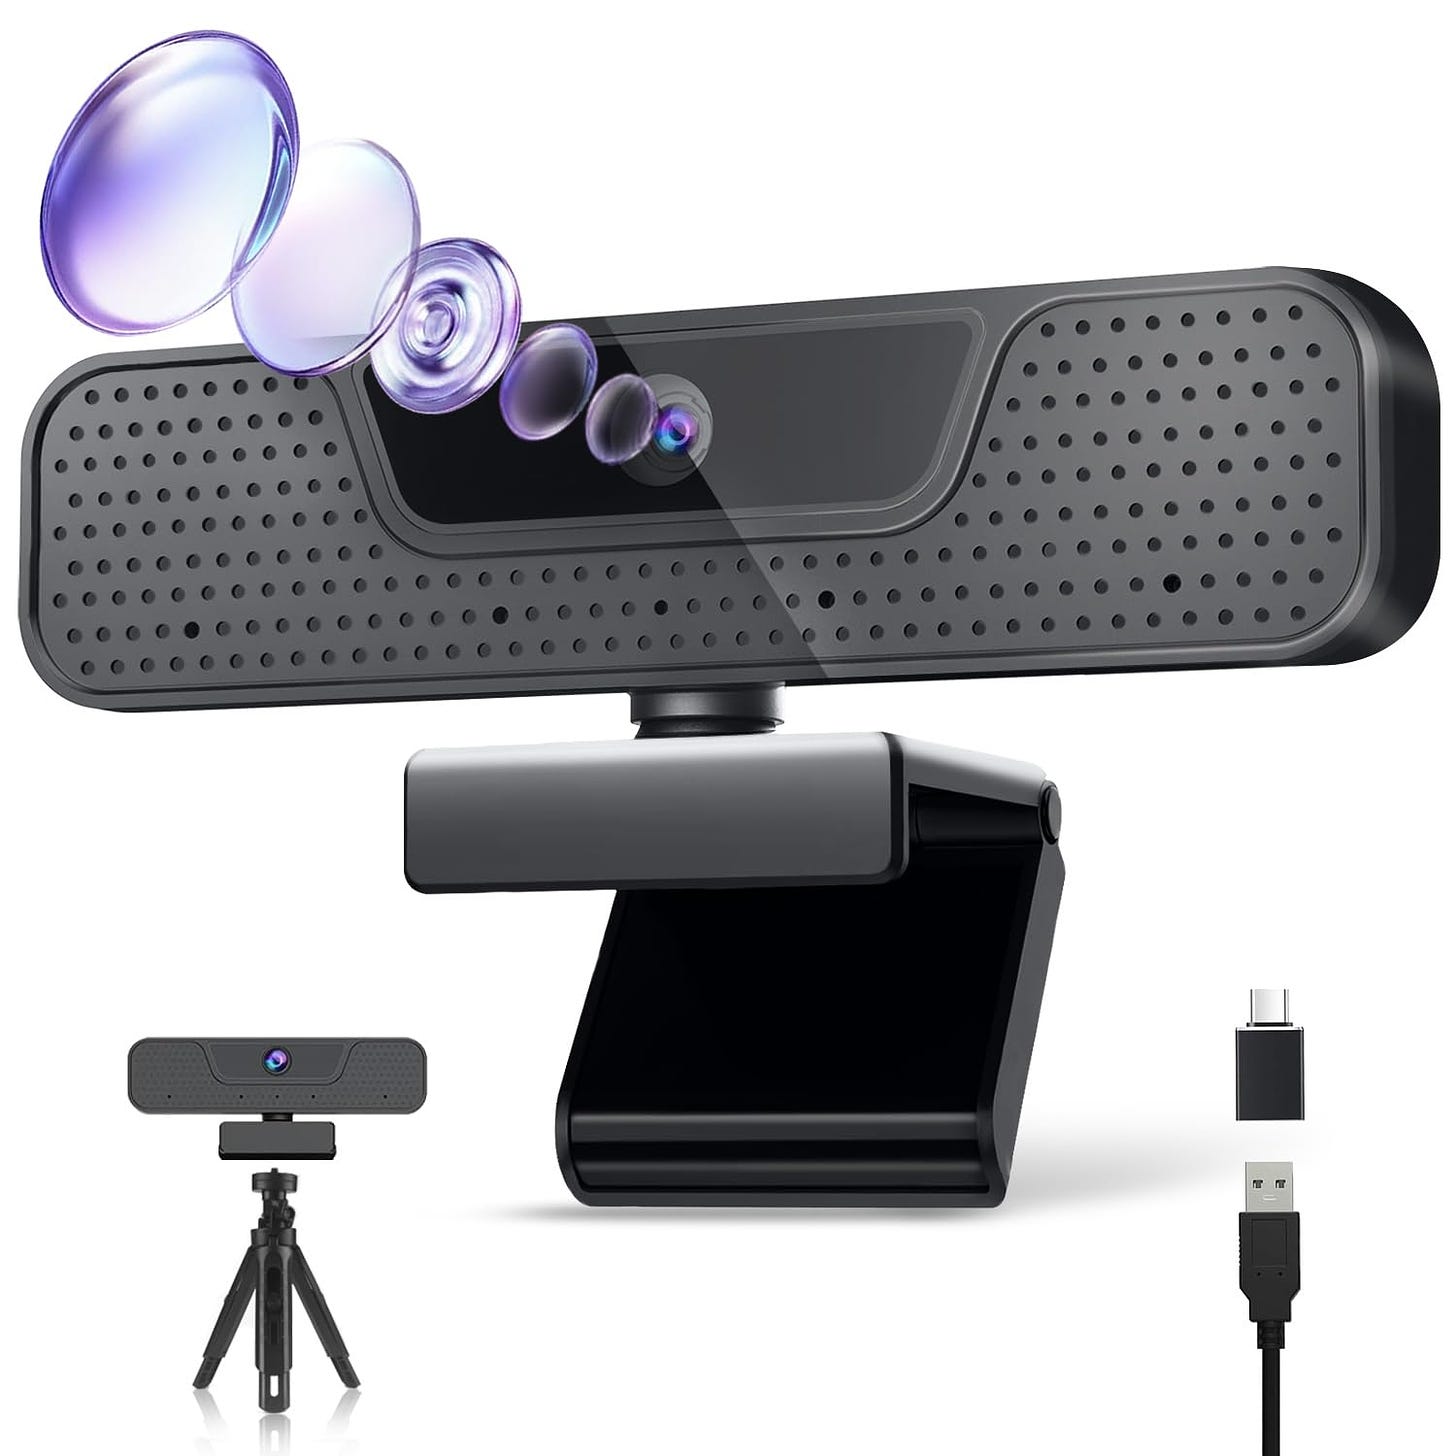 The Best Affordable Webcams for Minimal Lens Distortion